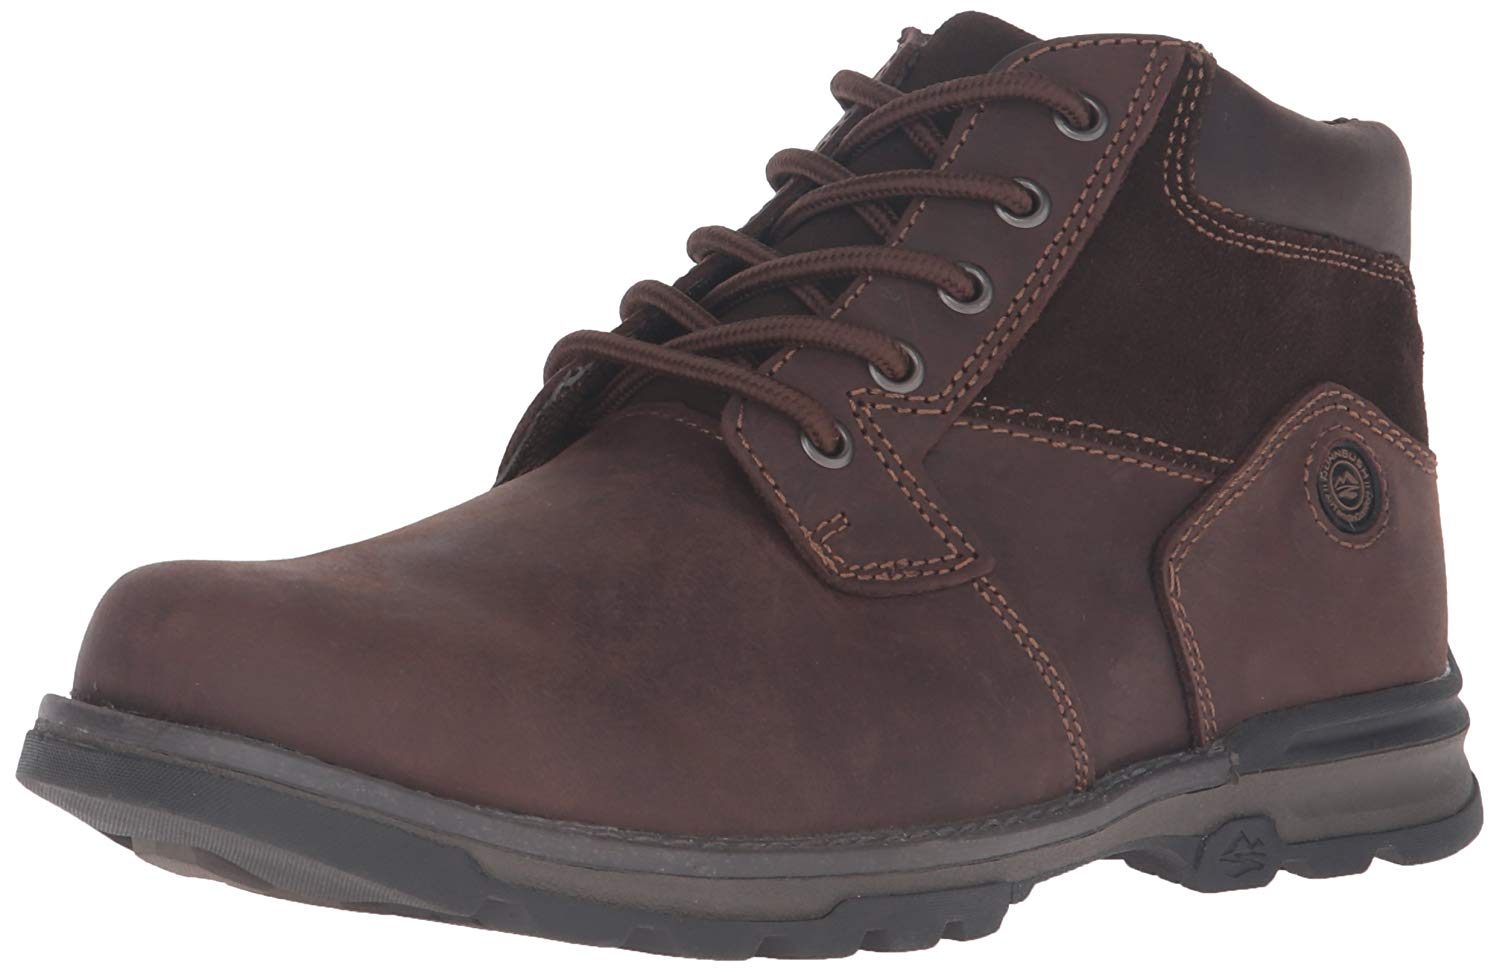 Nunn Bush Mens Boots in Brown Color, Size 7.5 XOS | eBay